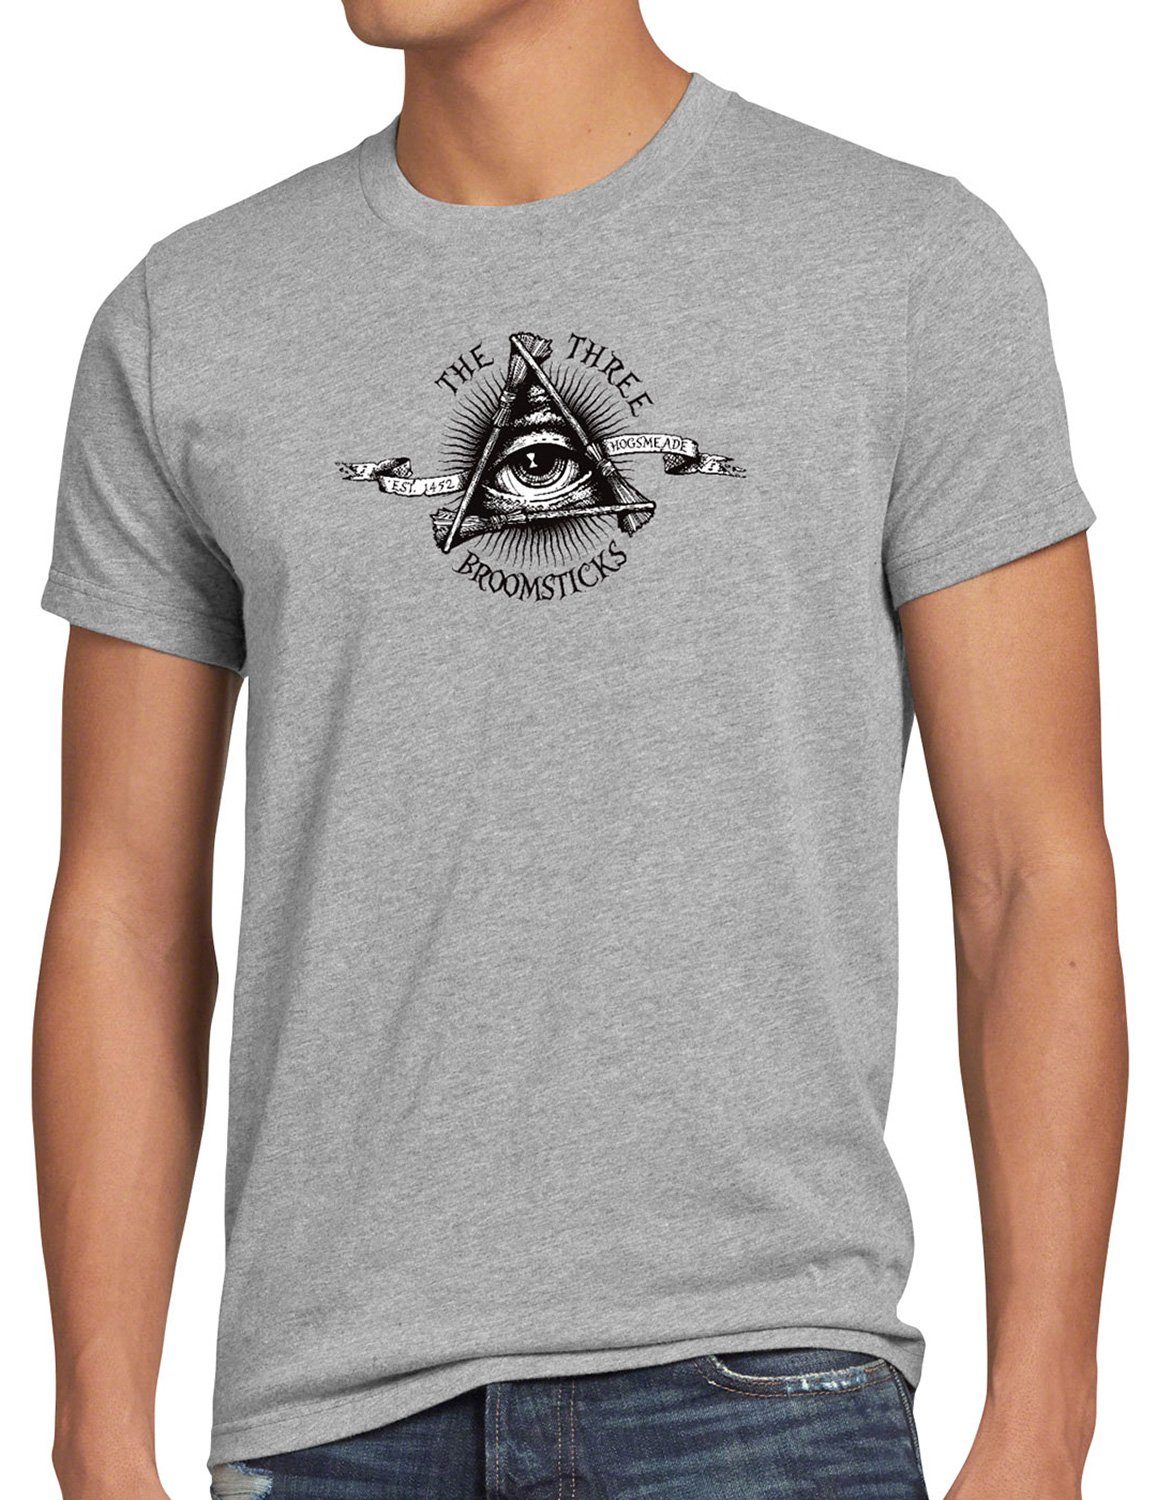 style3 Print-Shirt Herren T-Shirt The Three Broomsticks T-Shirt grau meliert